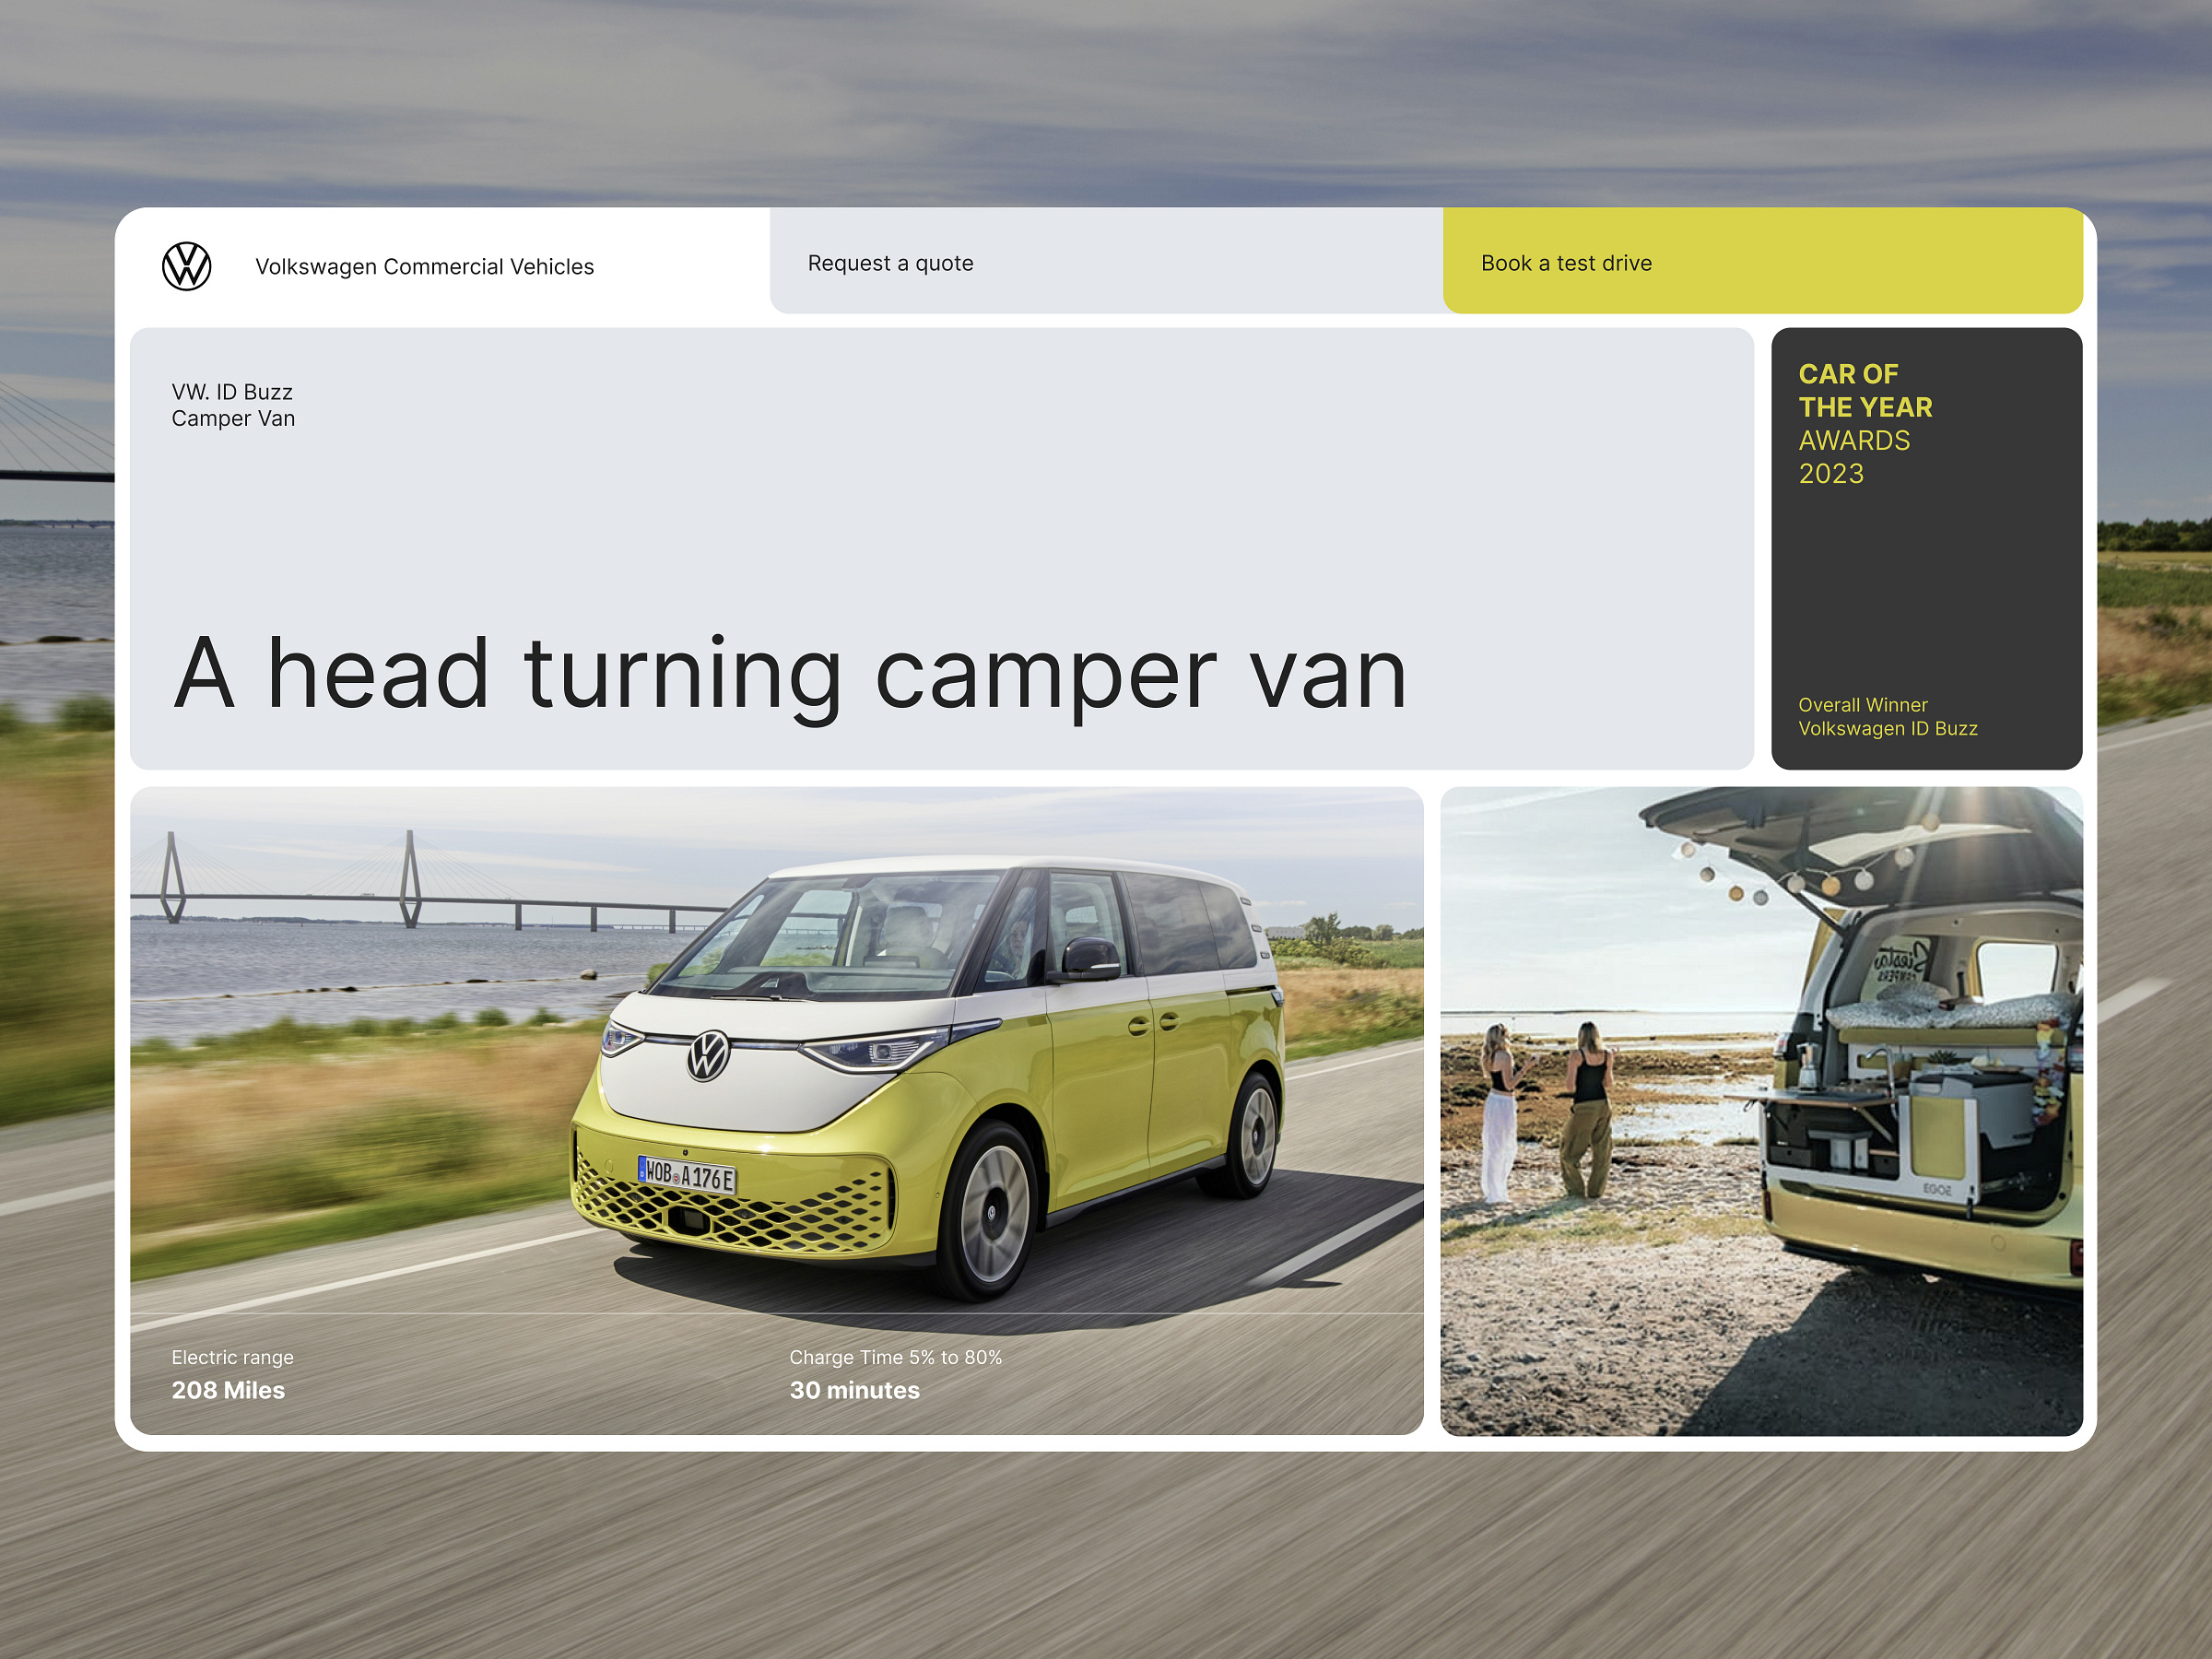 VW ID Buzz Camper Van: Explorations by Dmitry Chernov on Dribbble